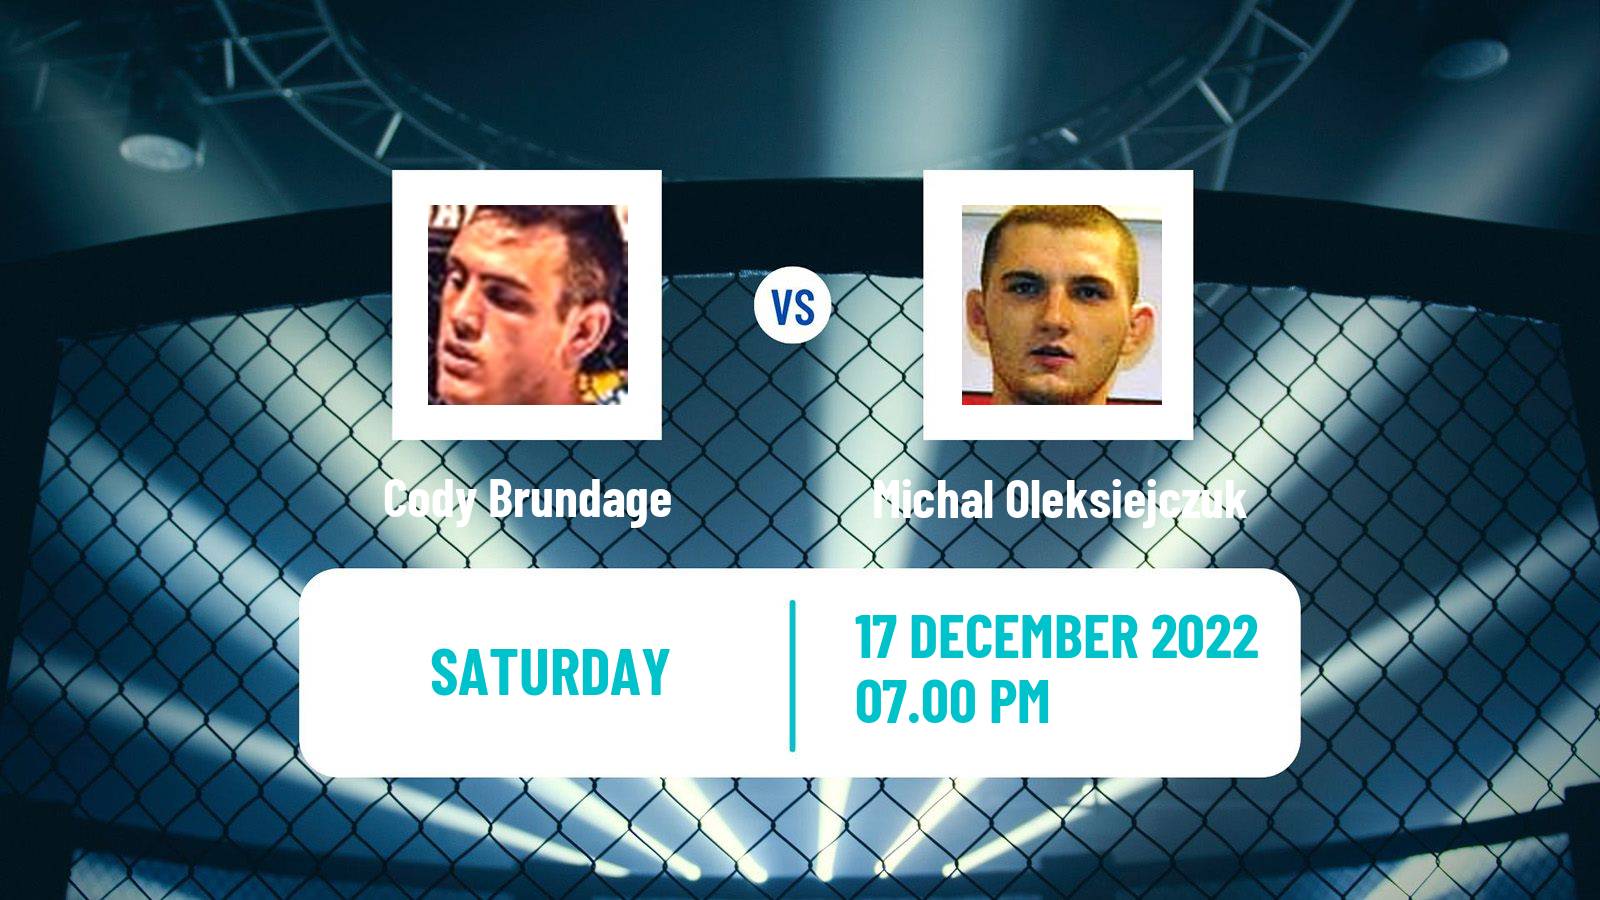 MMA MMA Cody Brundage - Michal Oleksiejczuk